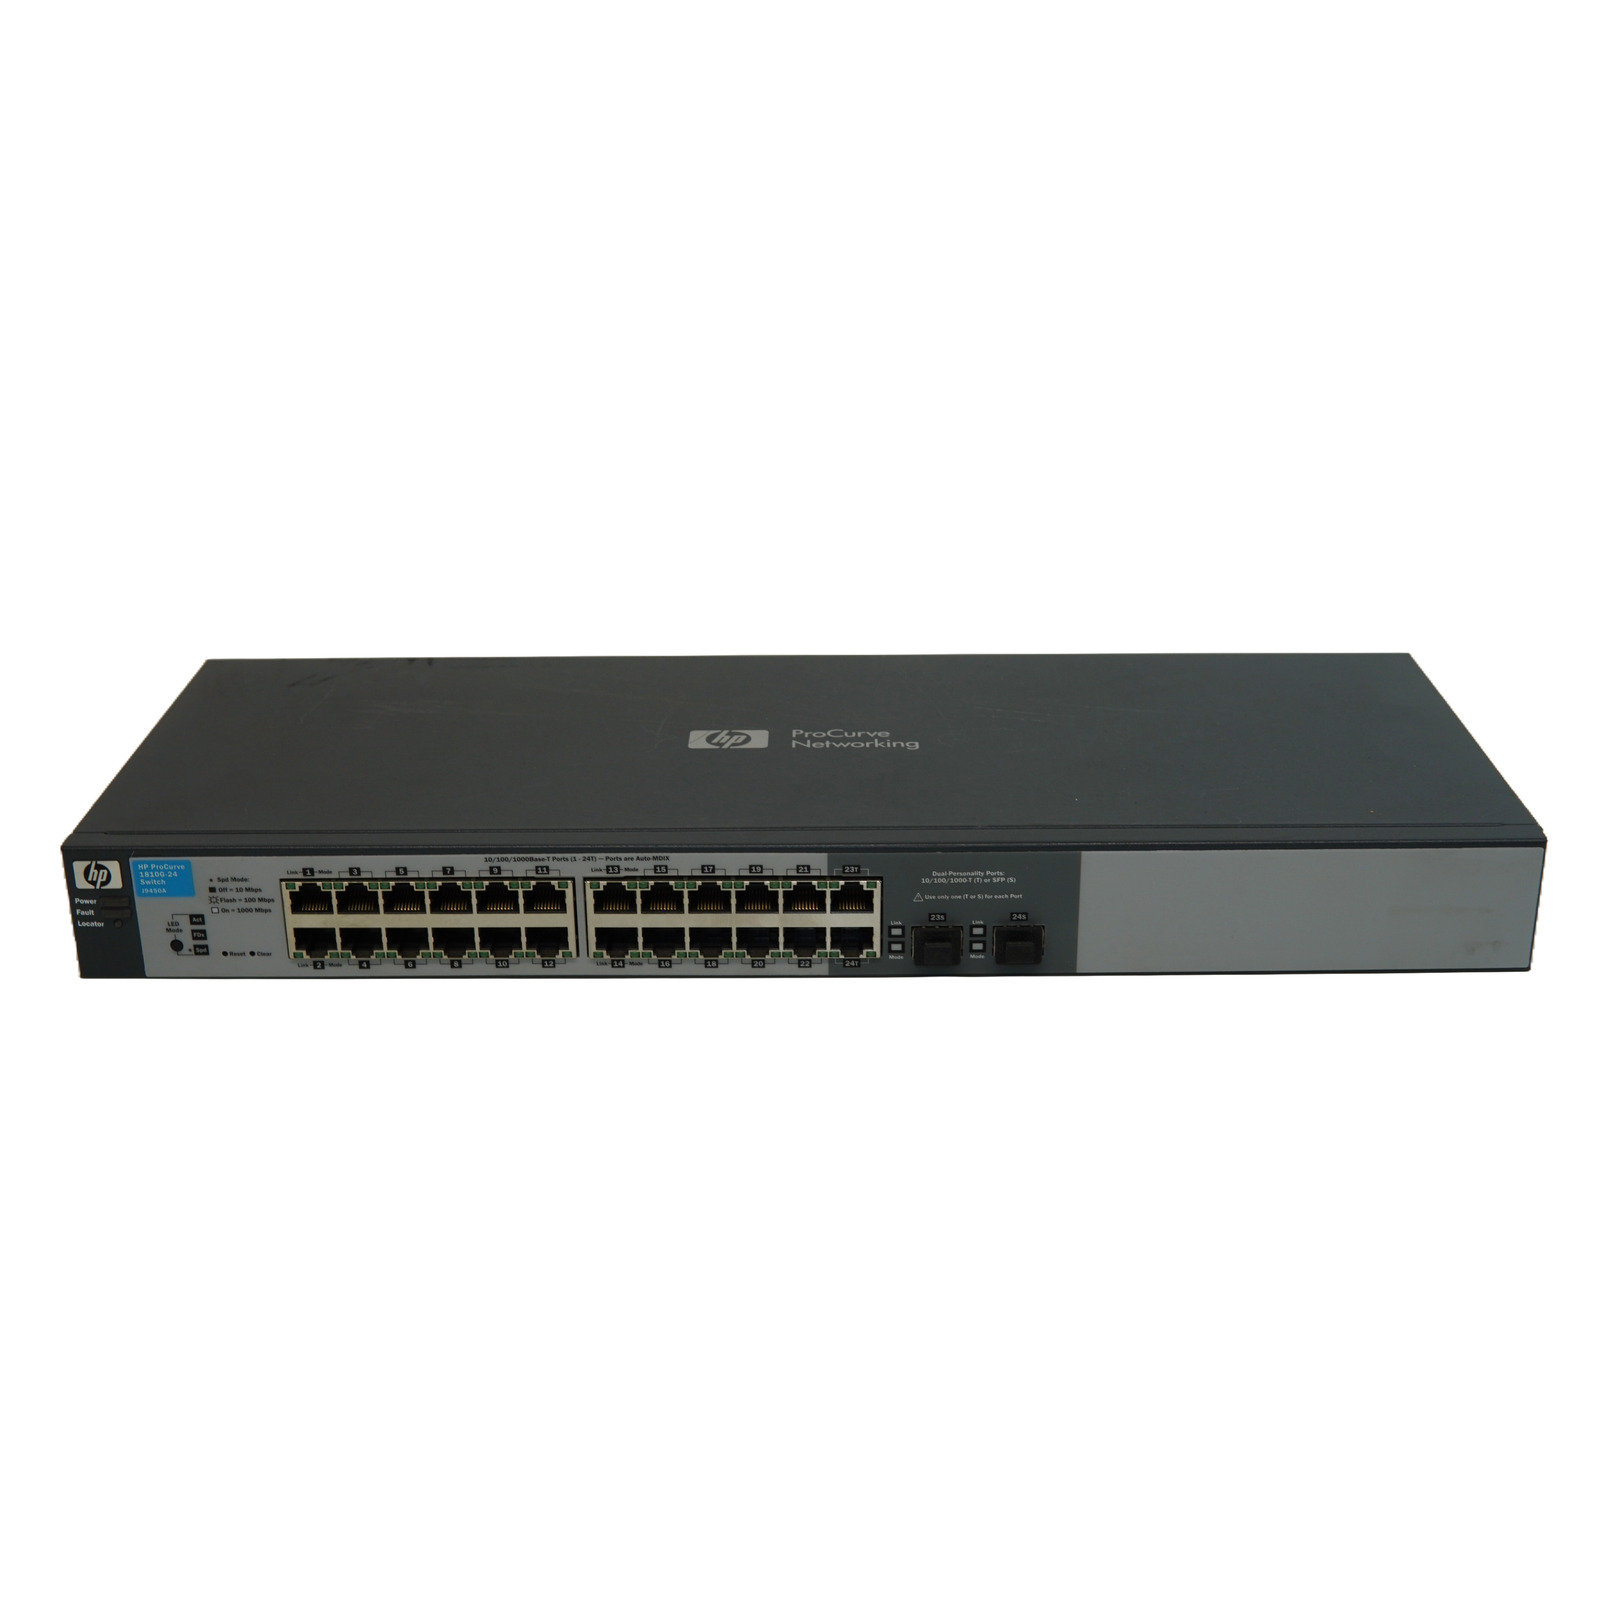 HP ProCurve 1810G-24/J9450A Managed 24 Port Switch